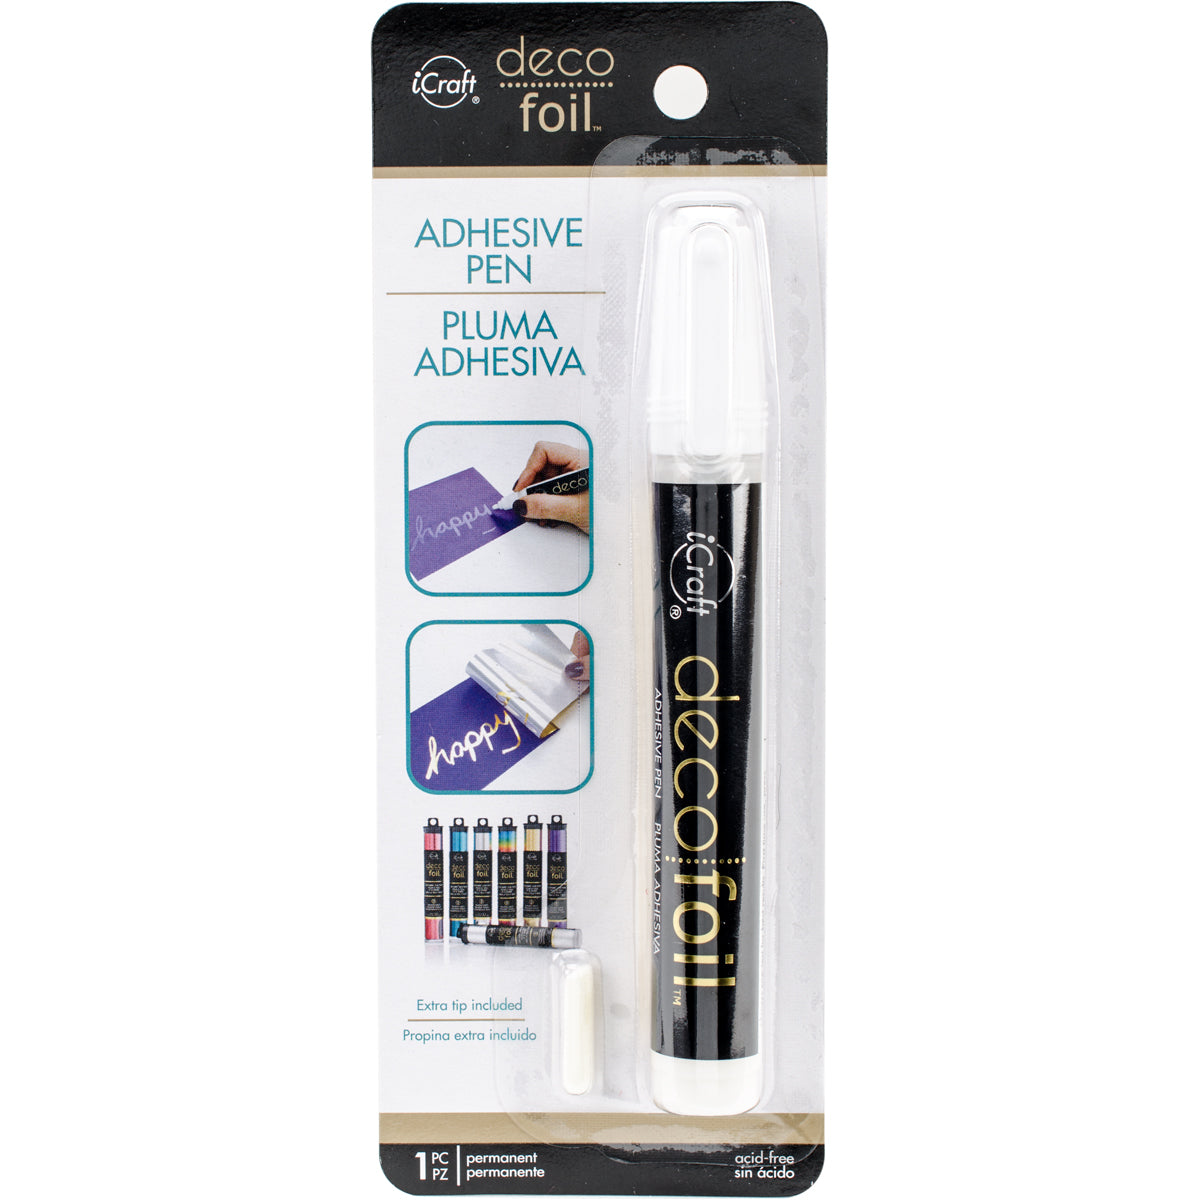 Deco Foil Adhesive Pen .34fl oz - Therm O Web